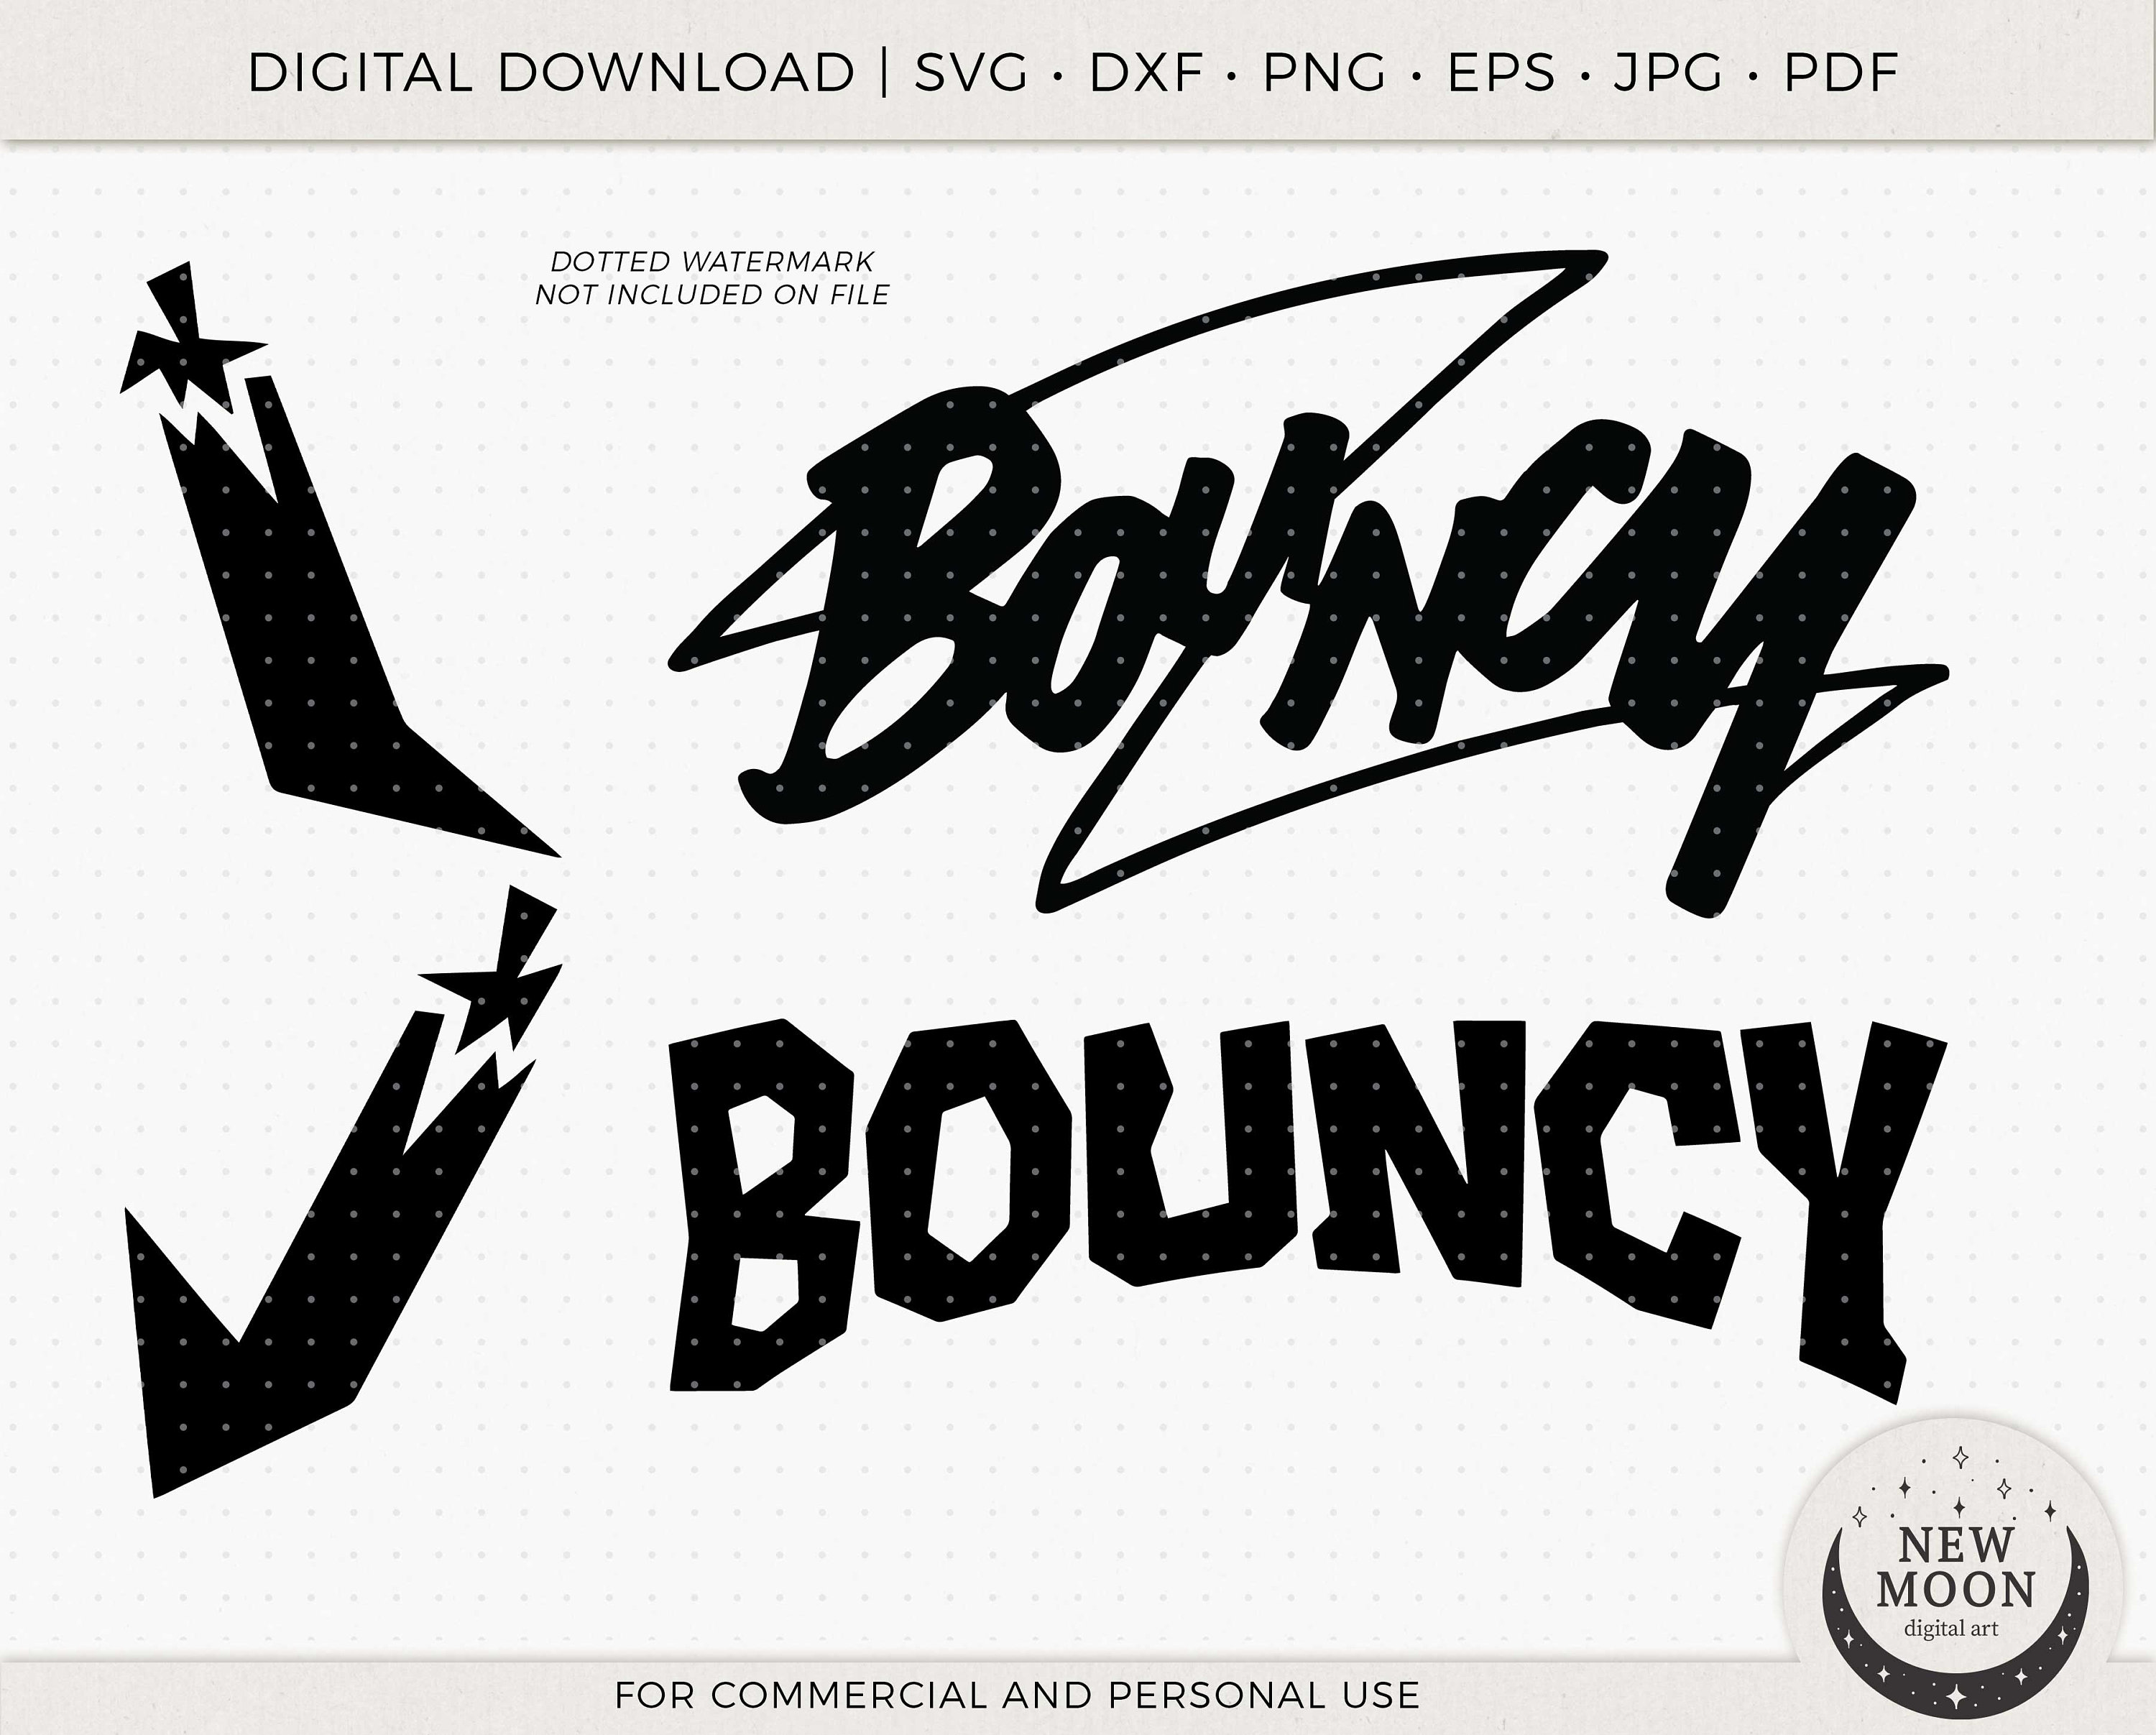 ATEEZ Eras Sticker 3.6 Deja Vu Bouncy Crazy Form Inception the Real  Guerrilla HALAZIA K-pop Merch Ateez Stickers 